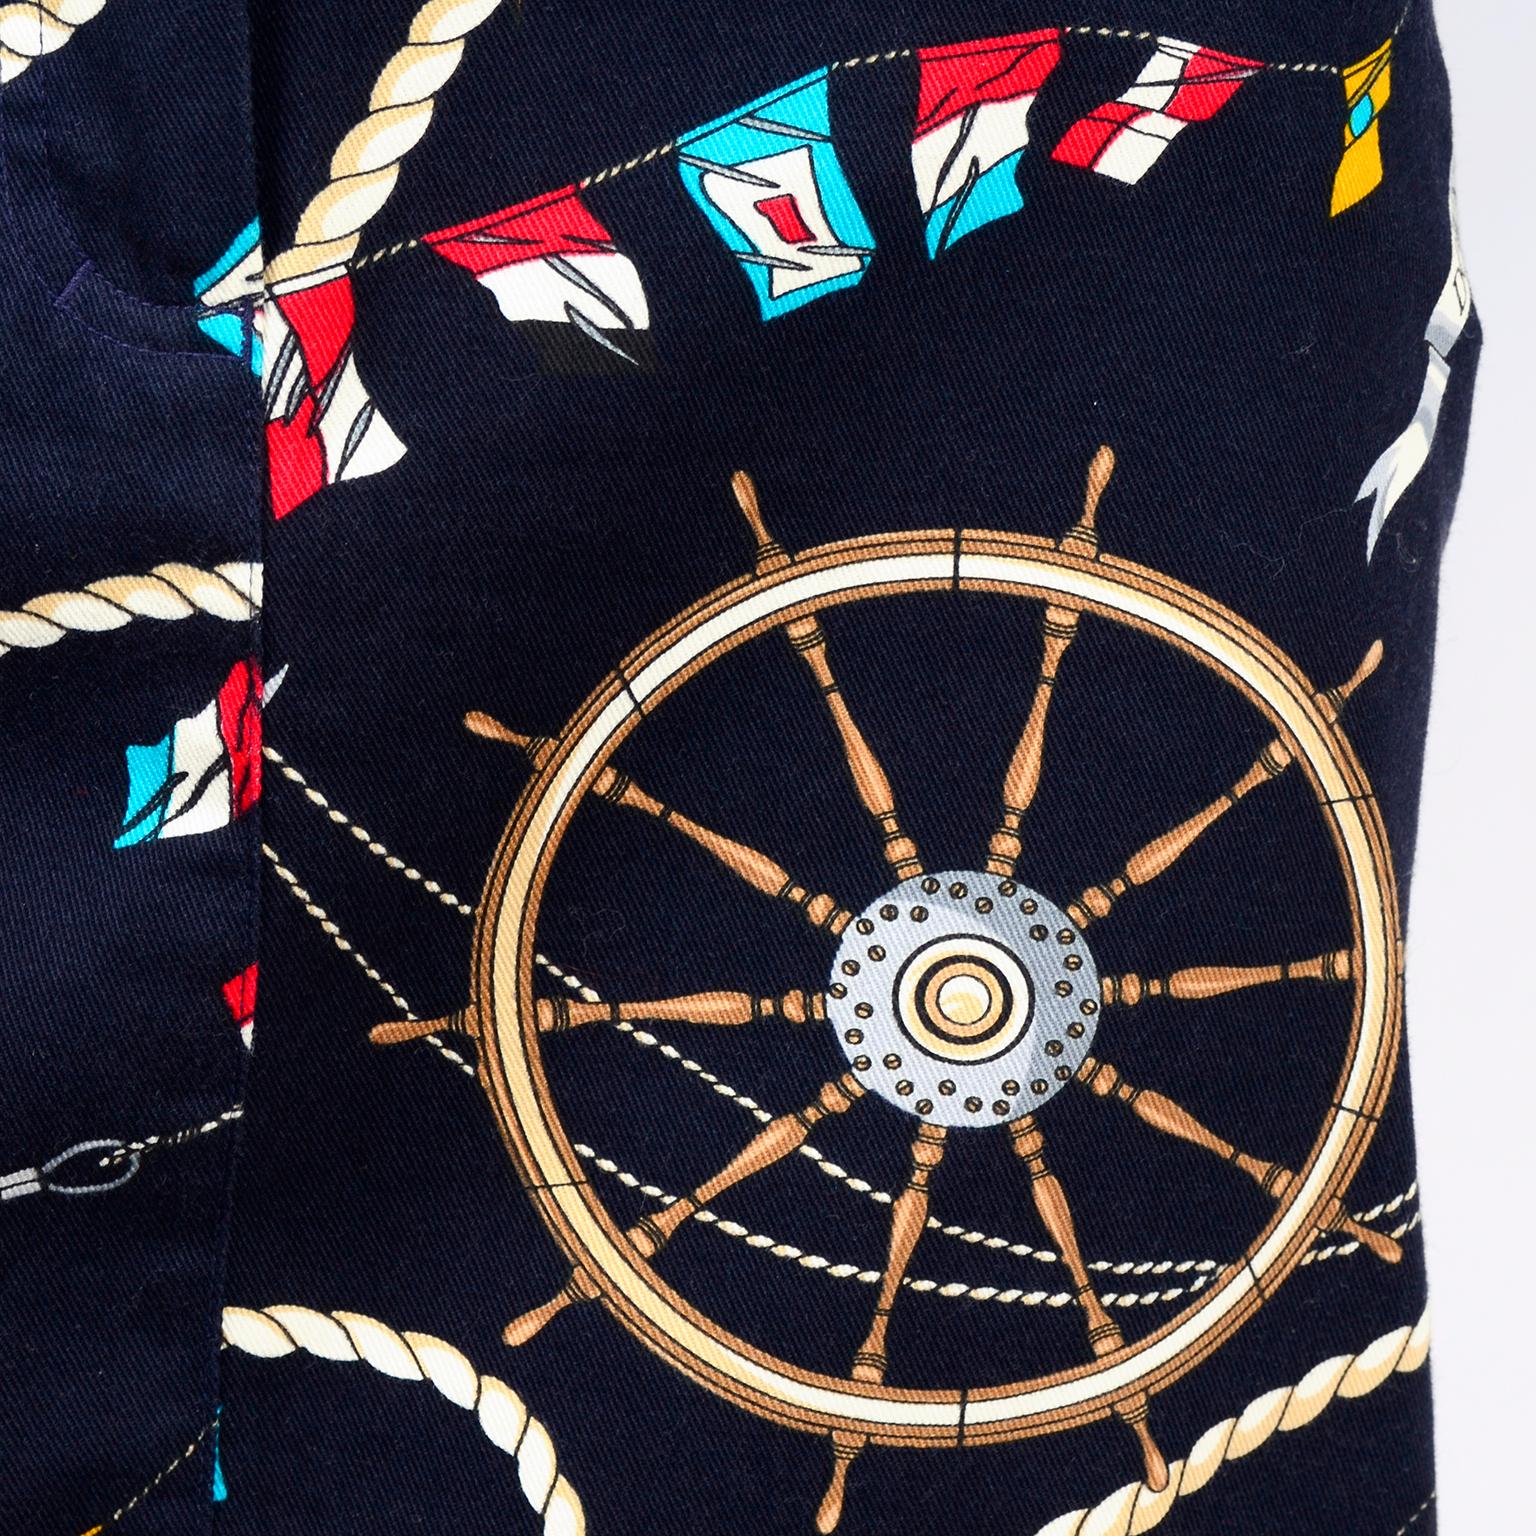 Mondi Vintage Skirt & Jacket in Black Denim Nautical Print W/ Gold Star Button 3